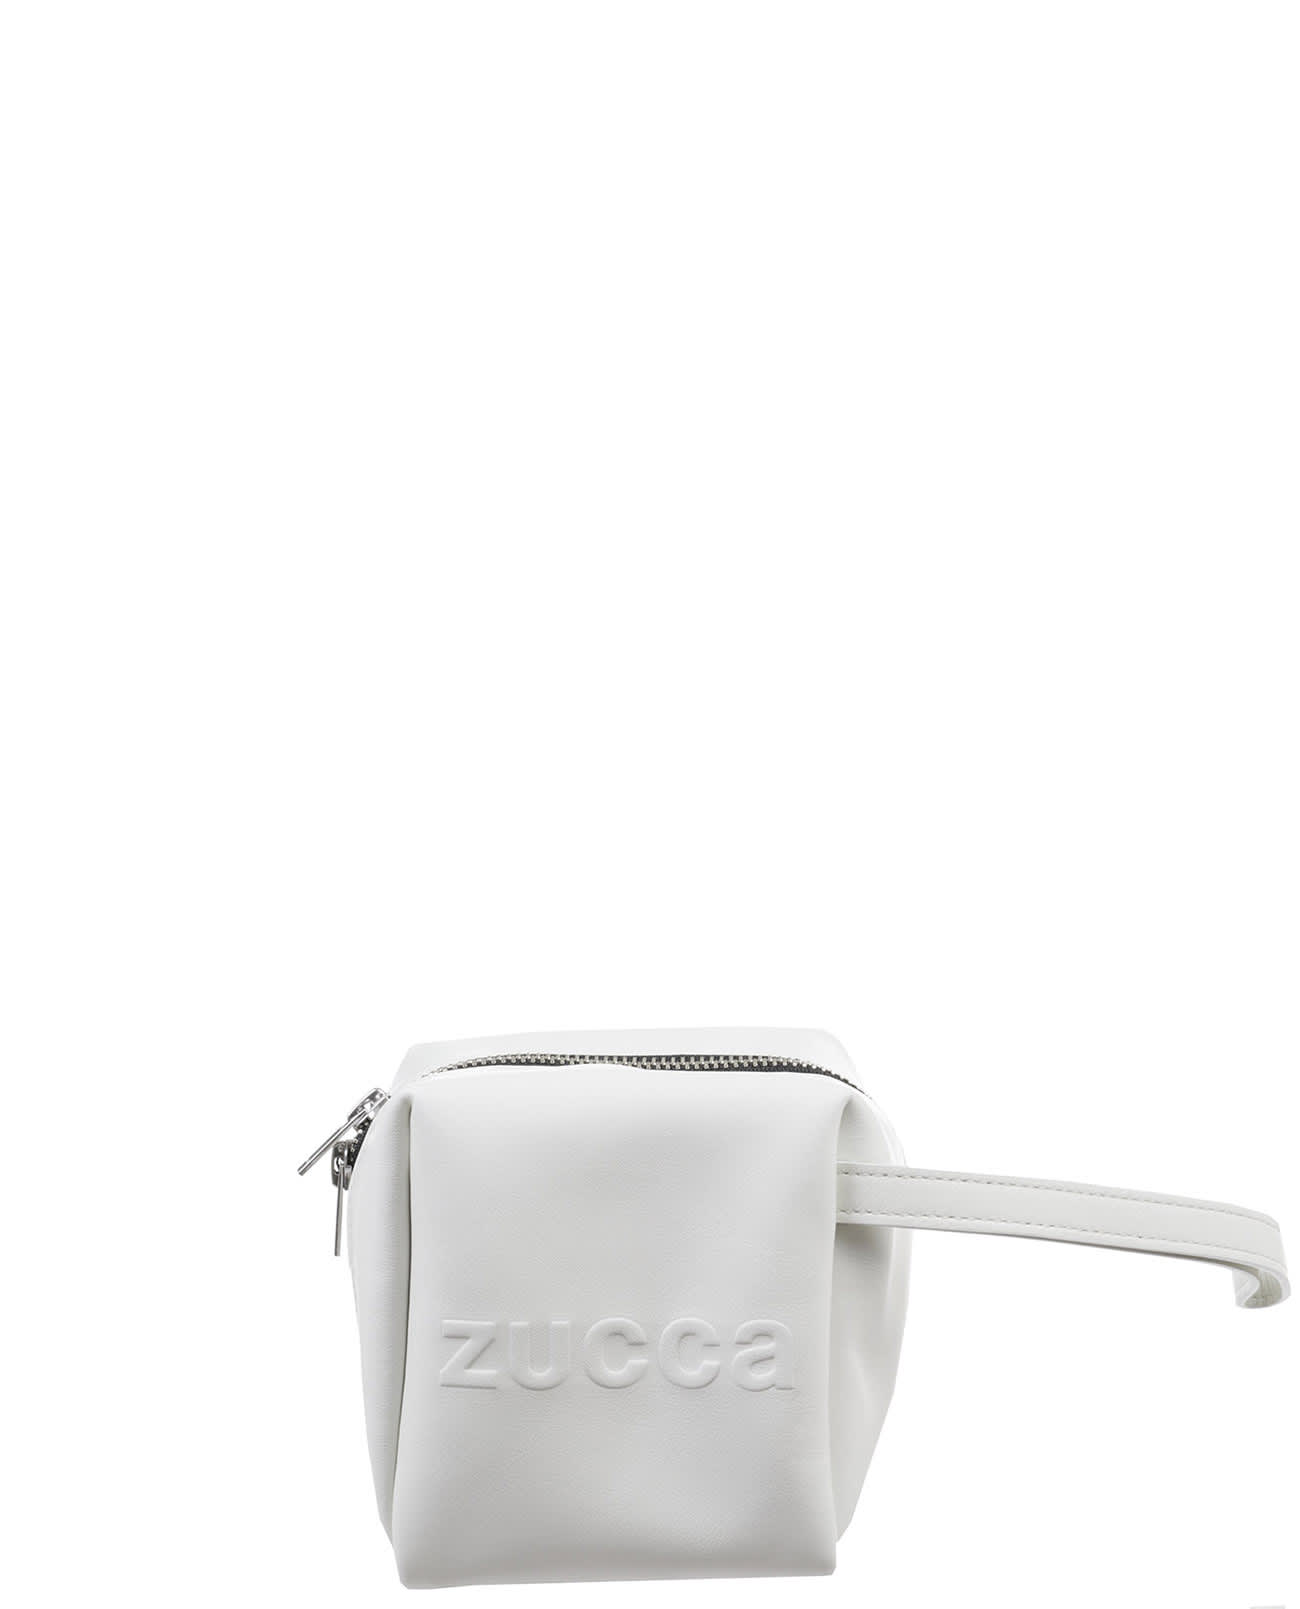 Zucca White Cube Bag